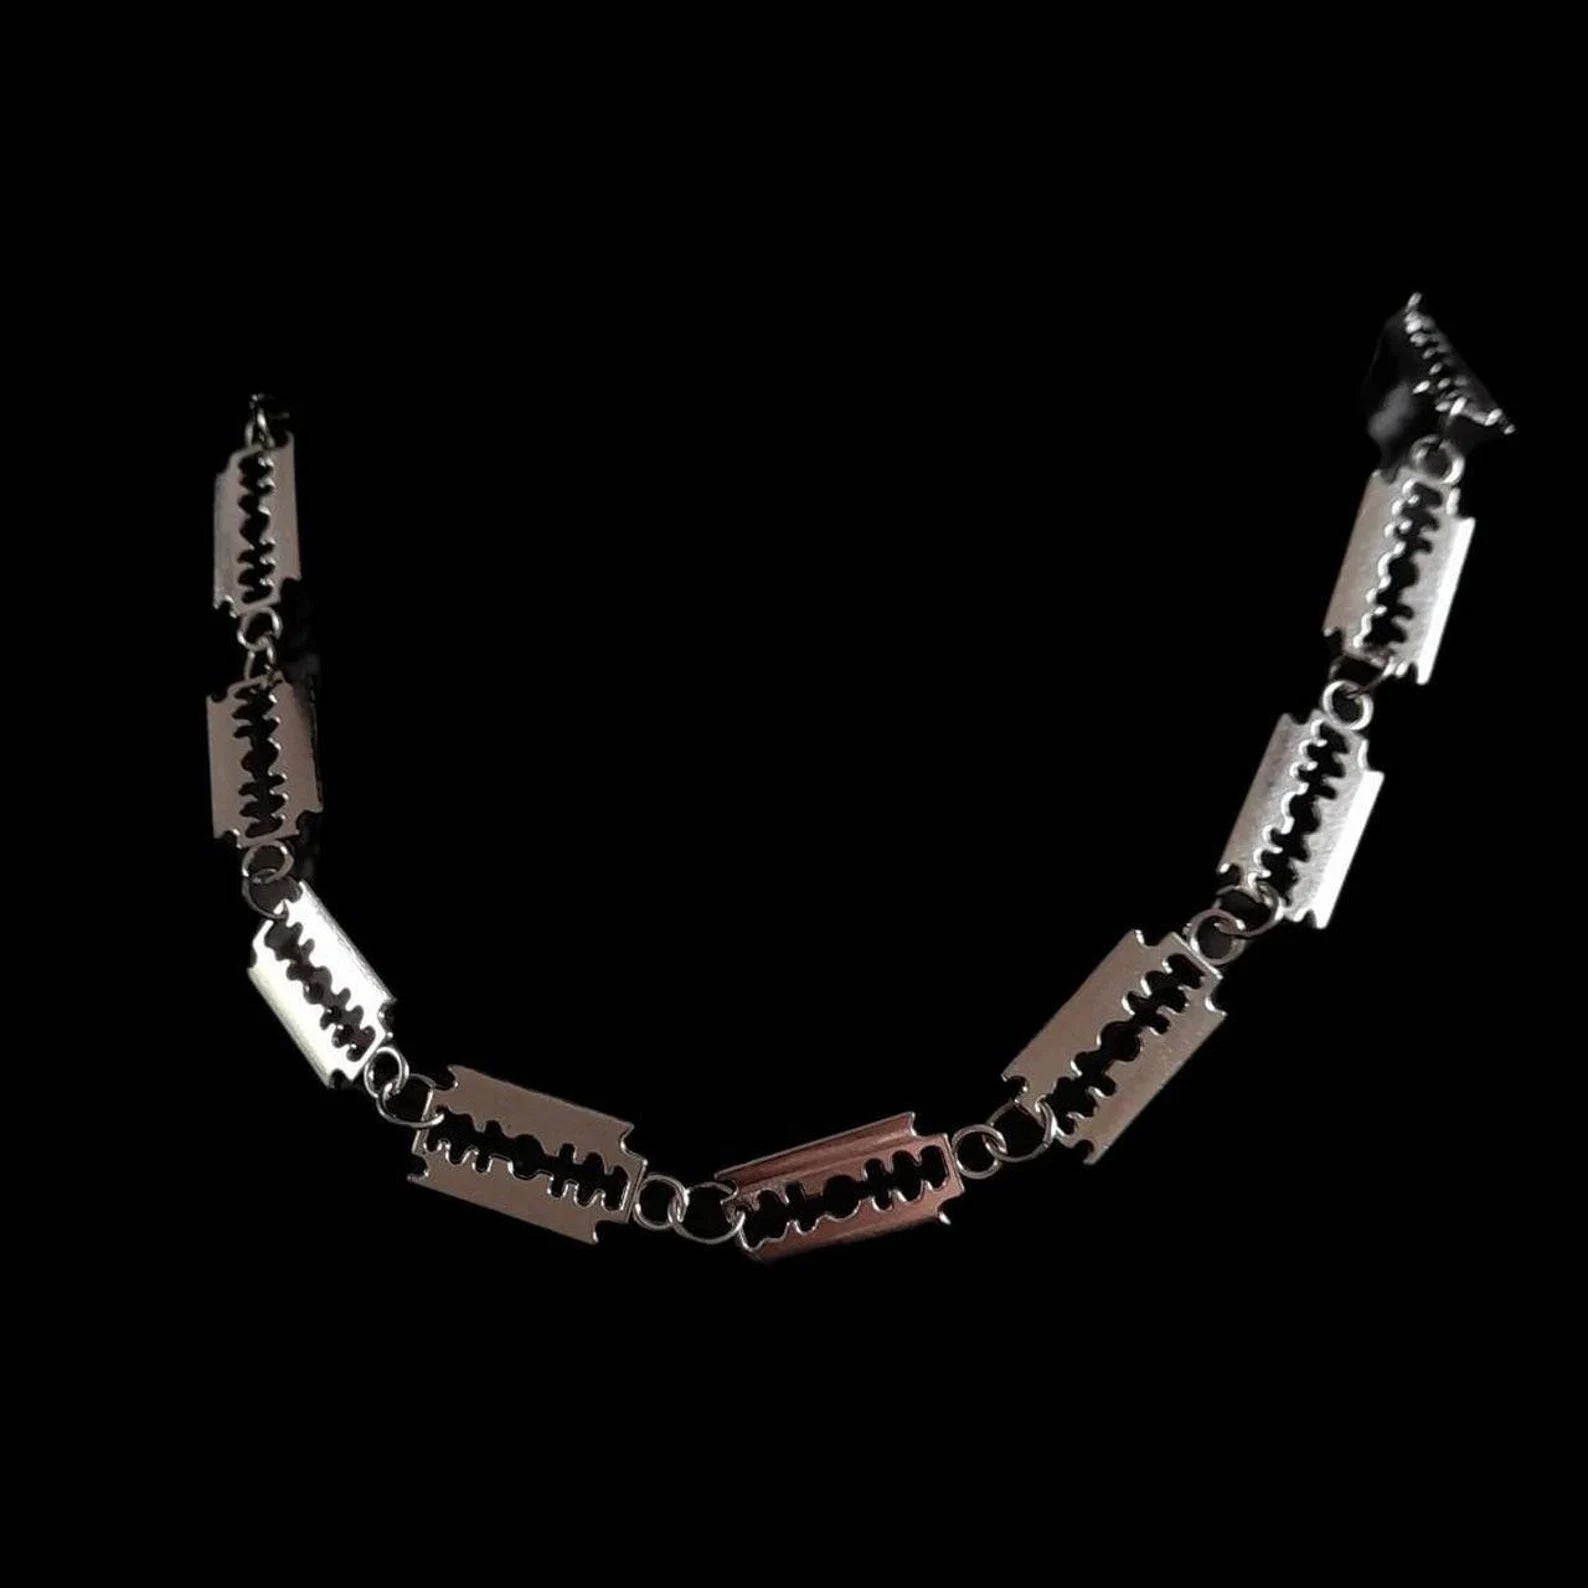 Choker Necklace - Silver